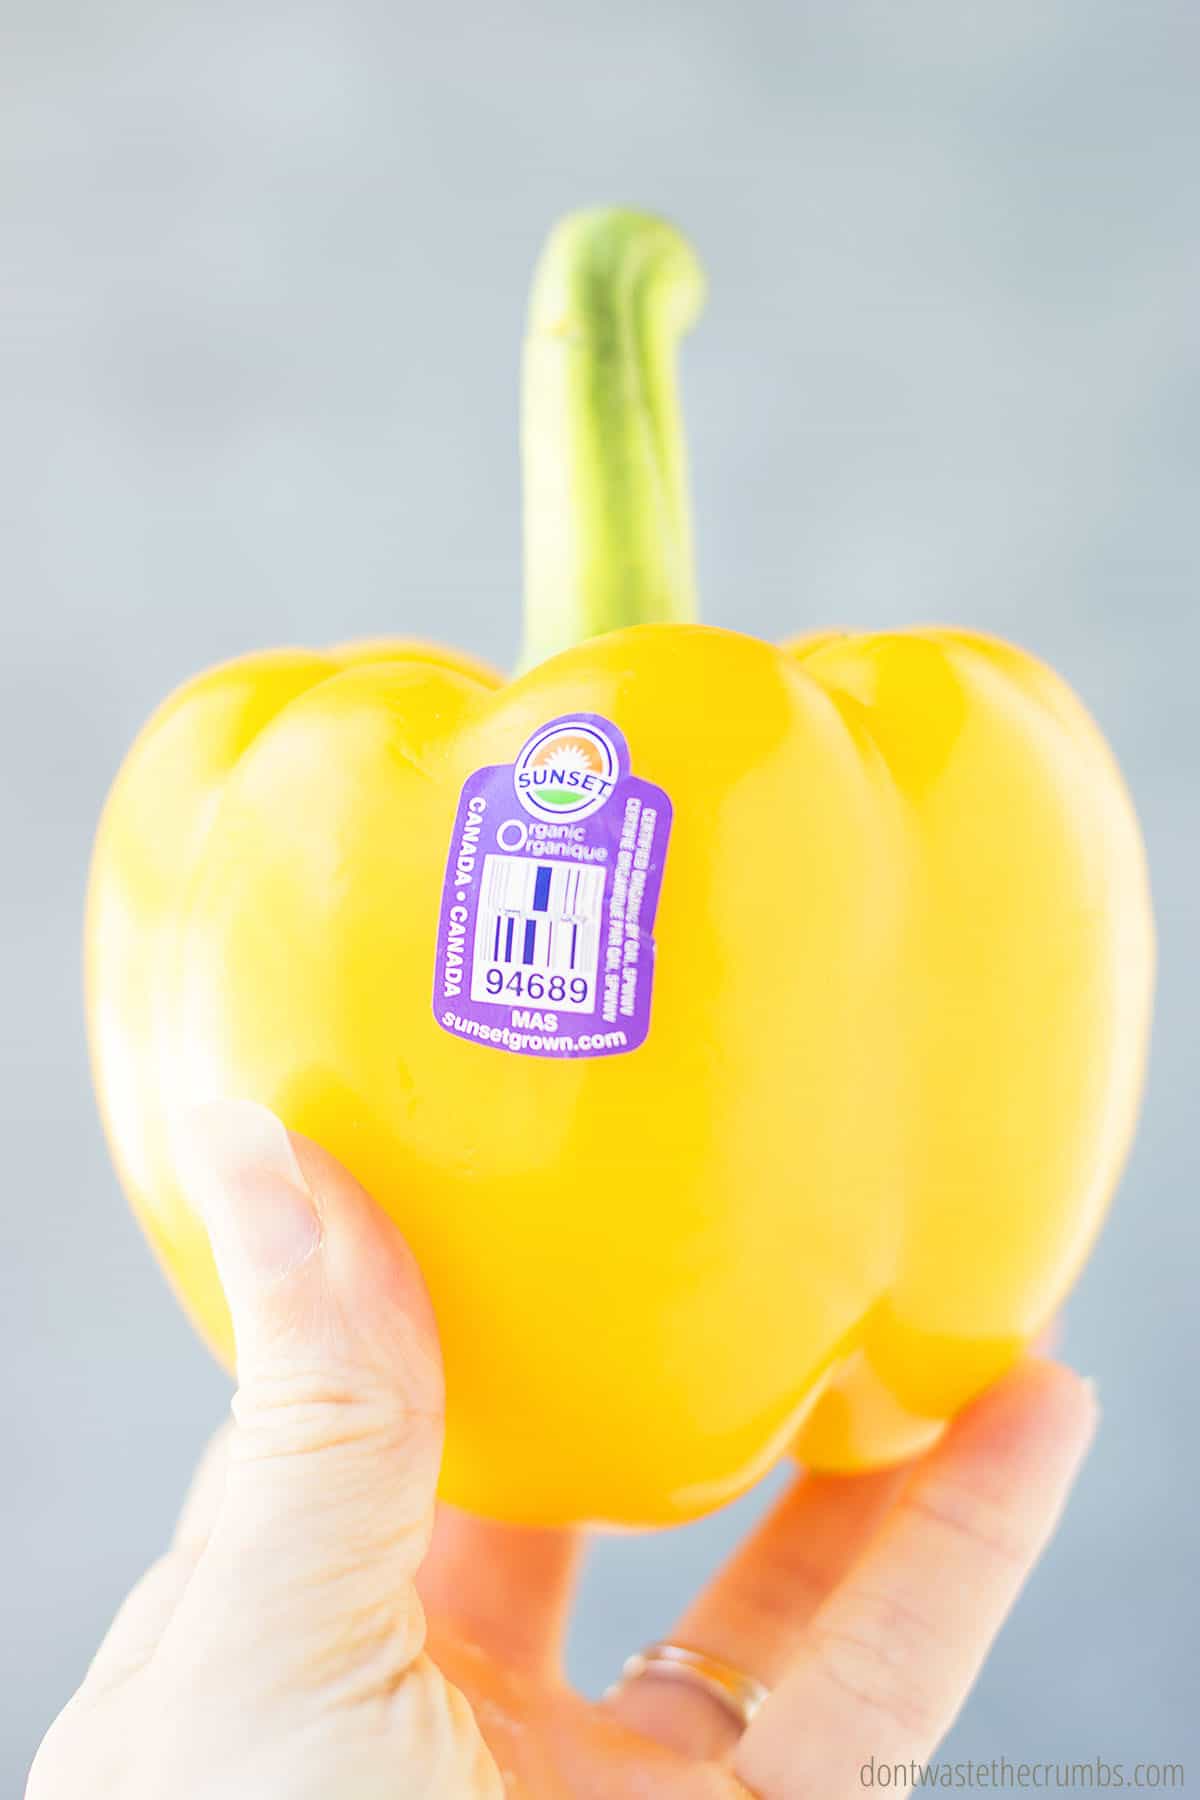 Organic yellow bell pepper with a PLU sticker.